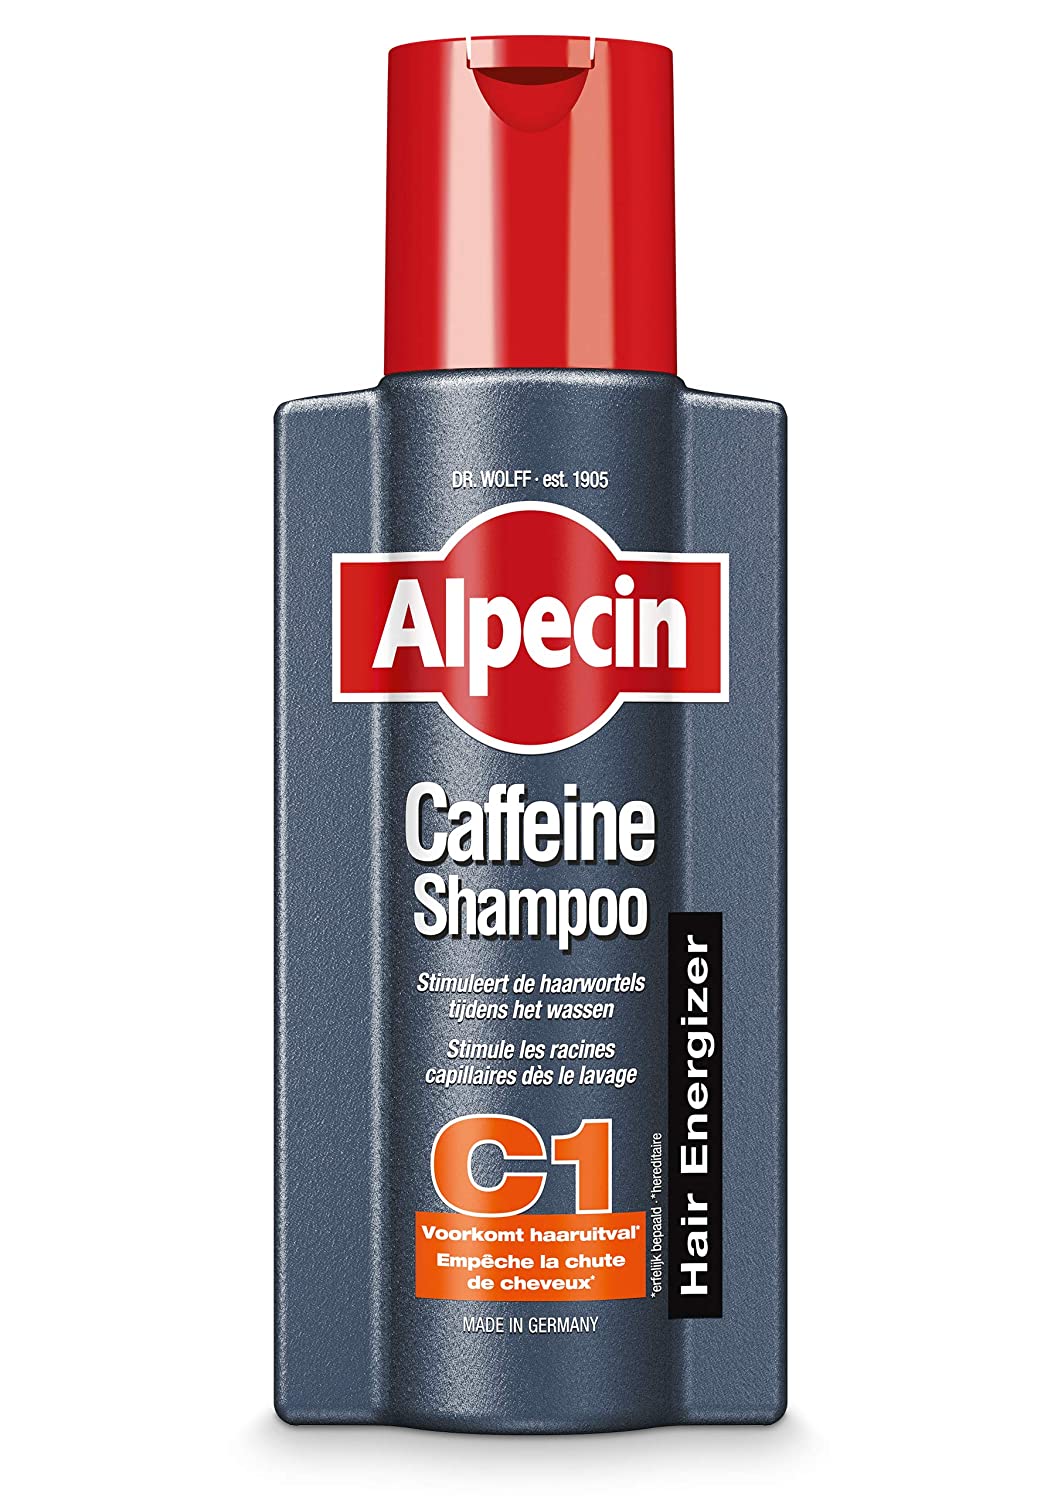 Alpecin Caffeine Shampoo C1, 1 x 250 ml – Voorkomt Haaruitval – Stimulates the Hair Roots of the Hair